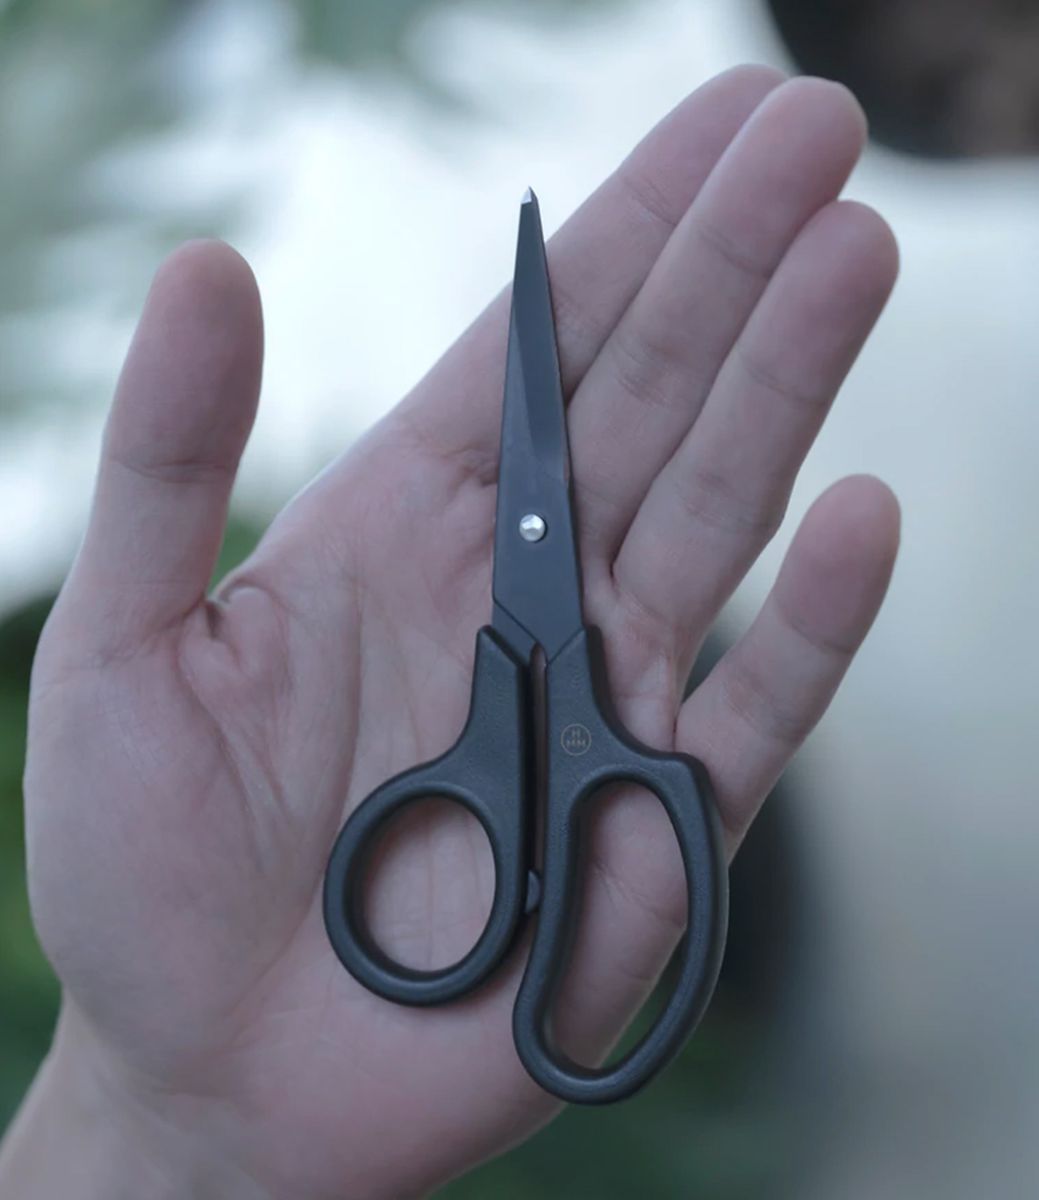 HMM Exacto Scissors Black — ножницы с чехлом